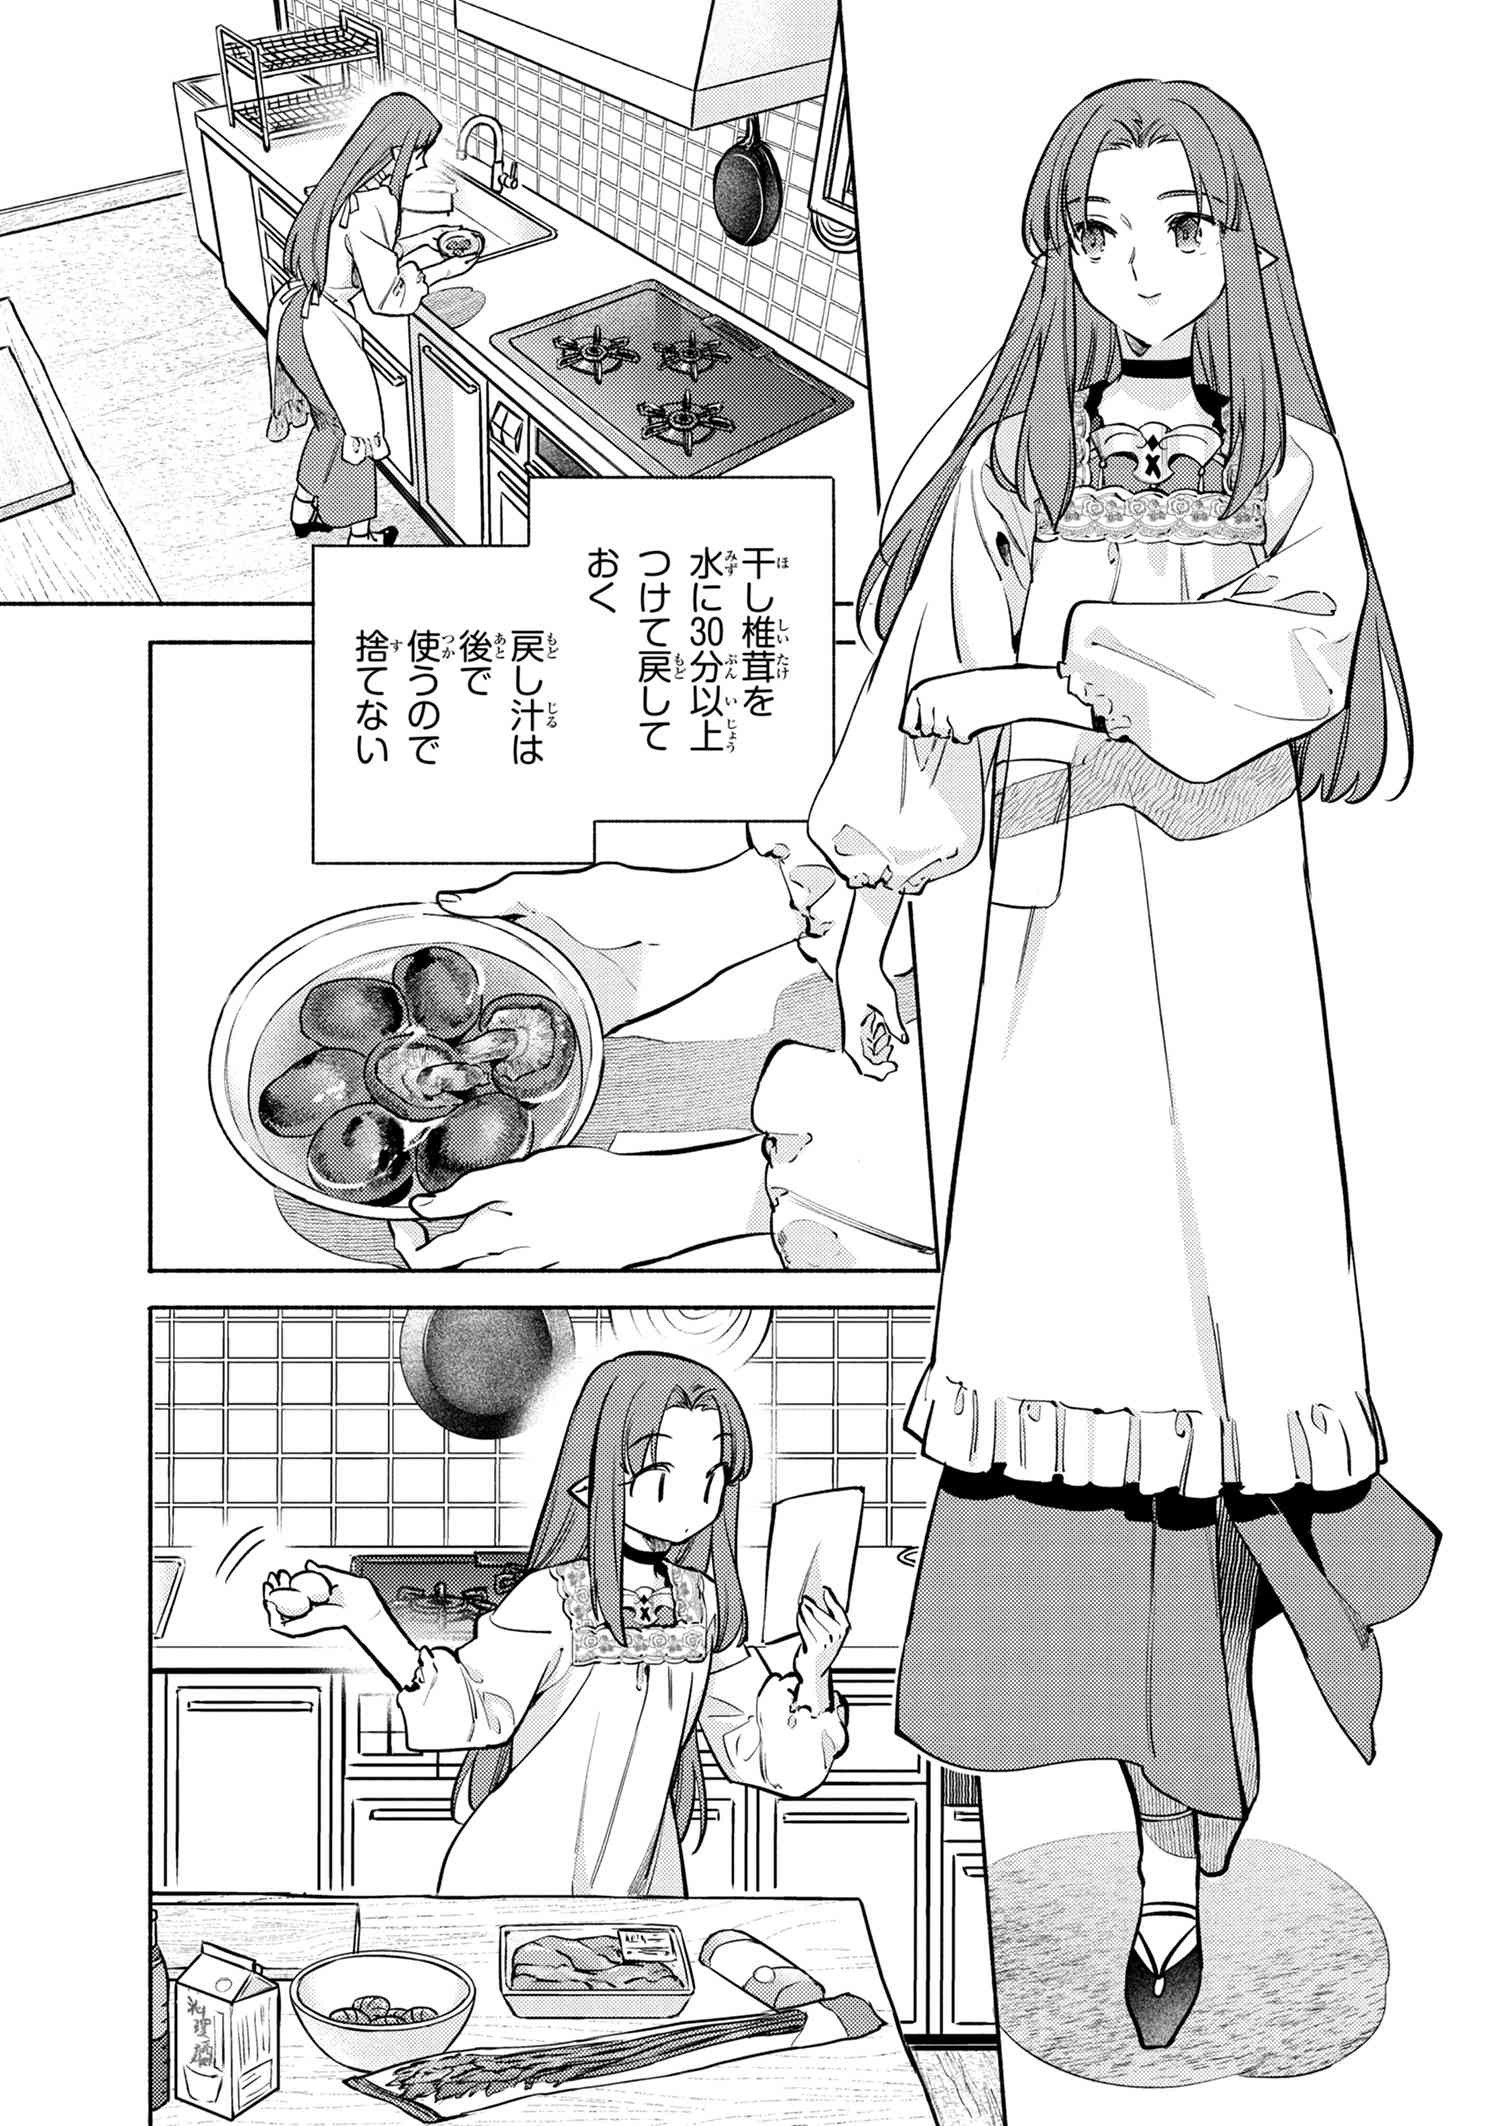 Emiya-san Chi no Kyou no Gohan - Chapter 45 - Page 3